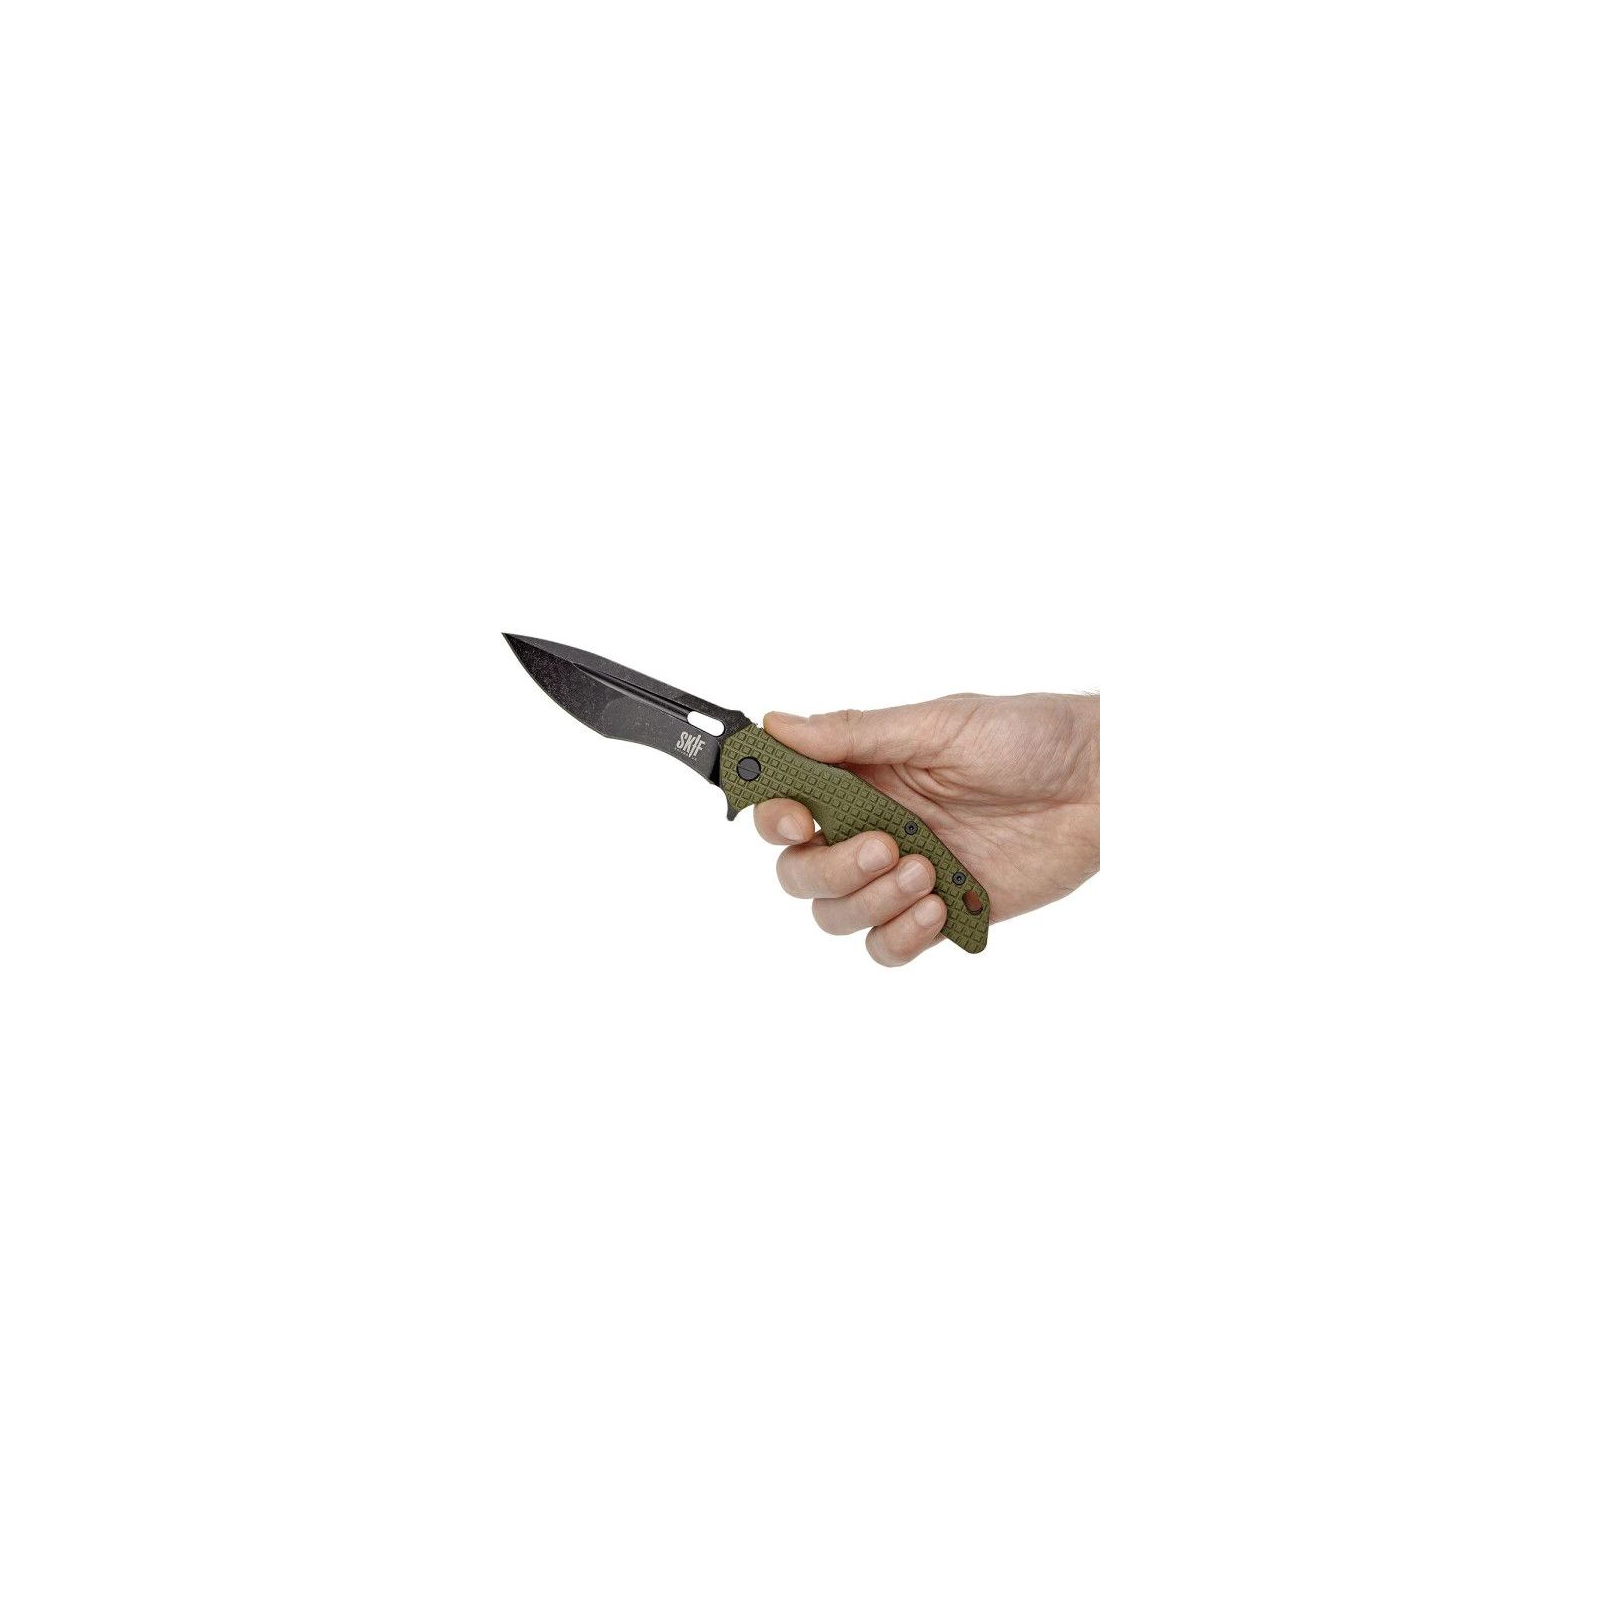 Нож Skif Defender II BSW Olive (423SEBG) изображение 5